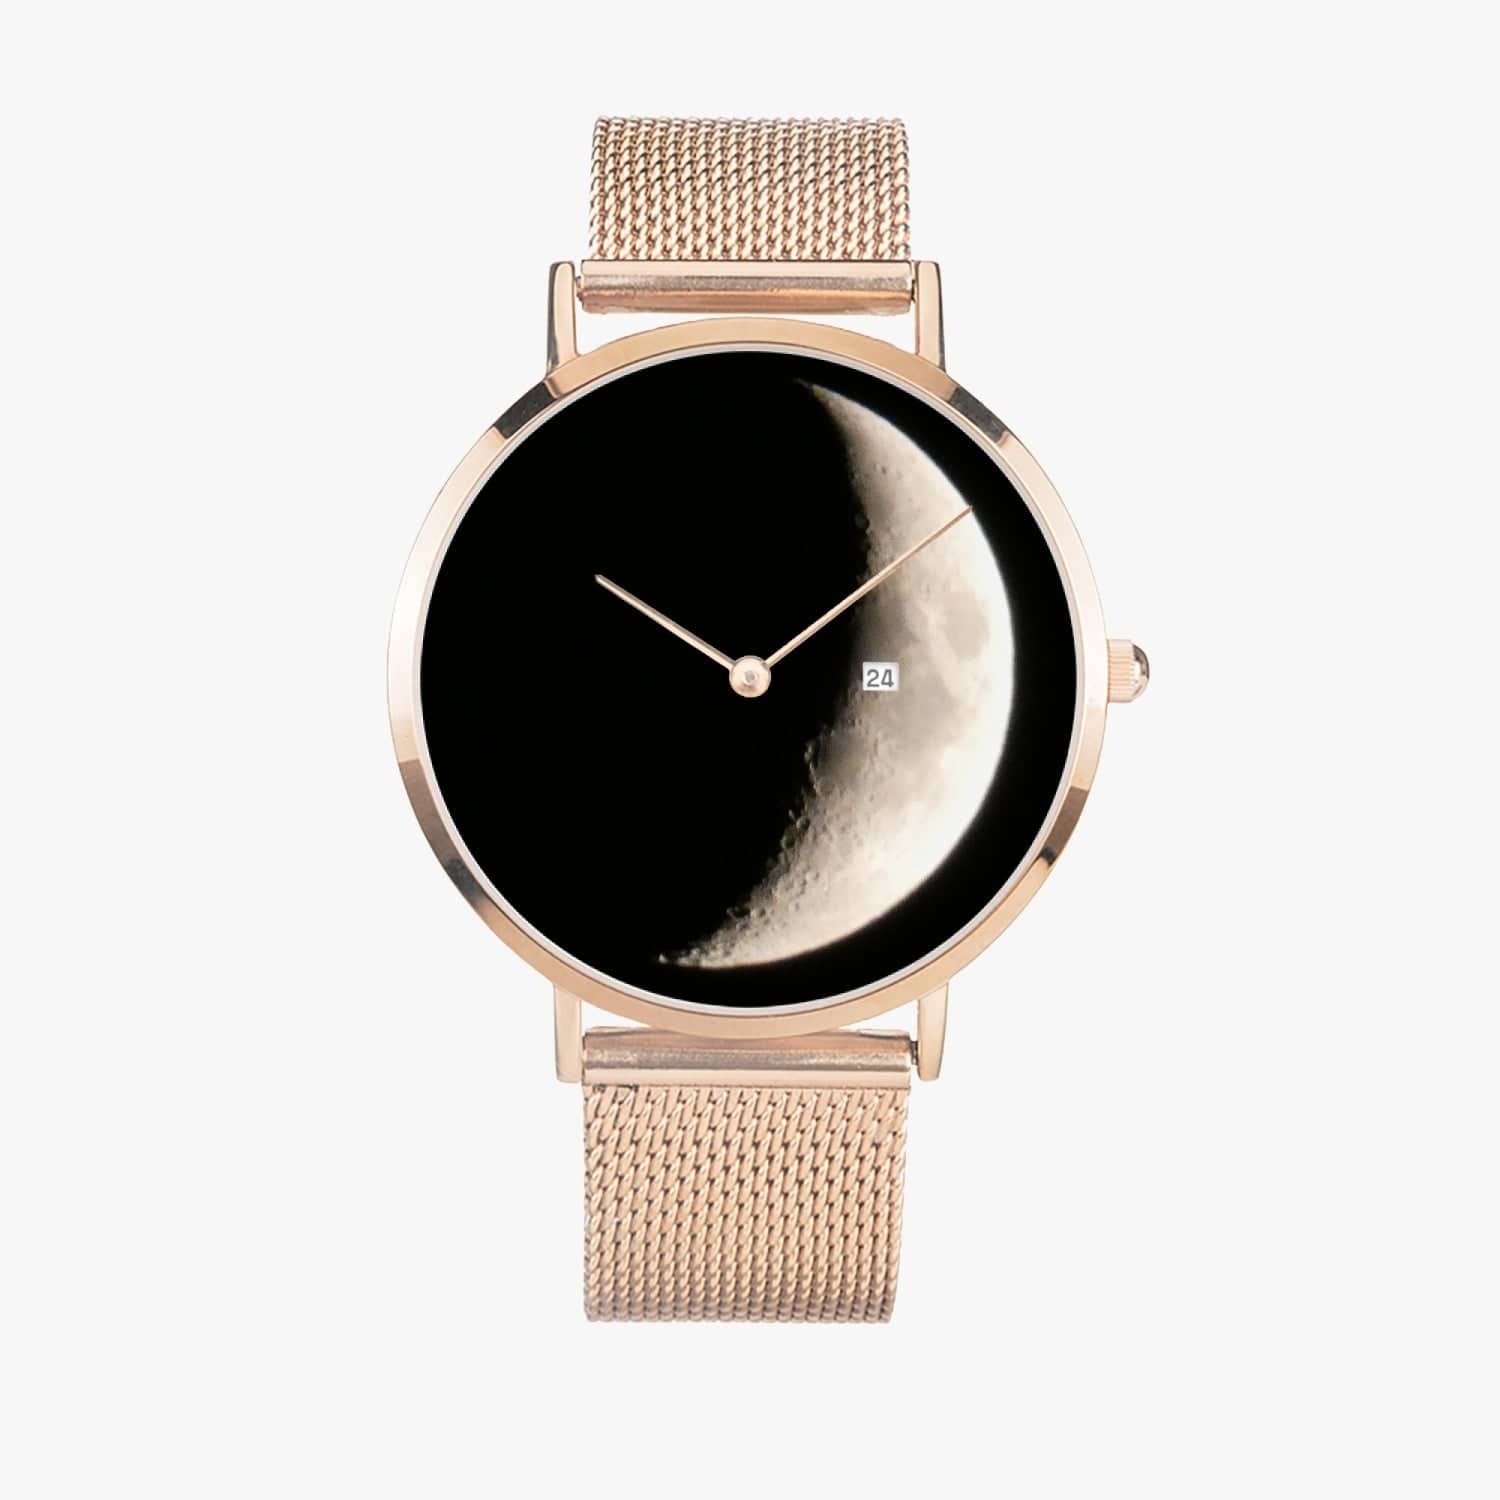 New moon. Stainless Steel Perpetual Calendar Quartz Watch.  Designer watch by Sensus Studio Design